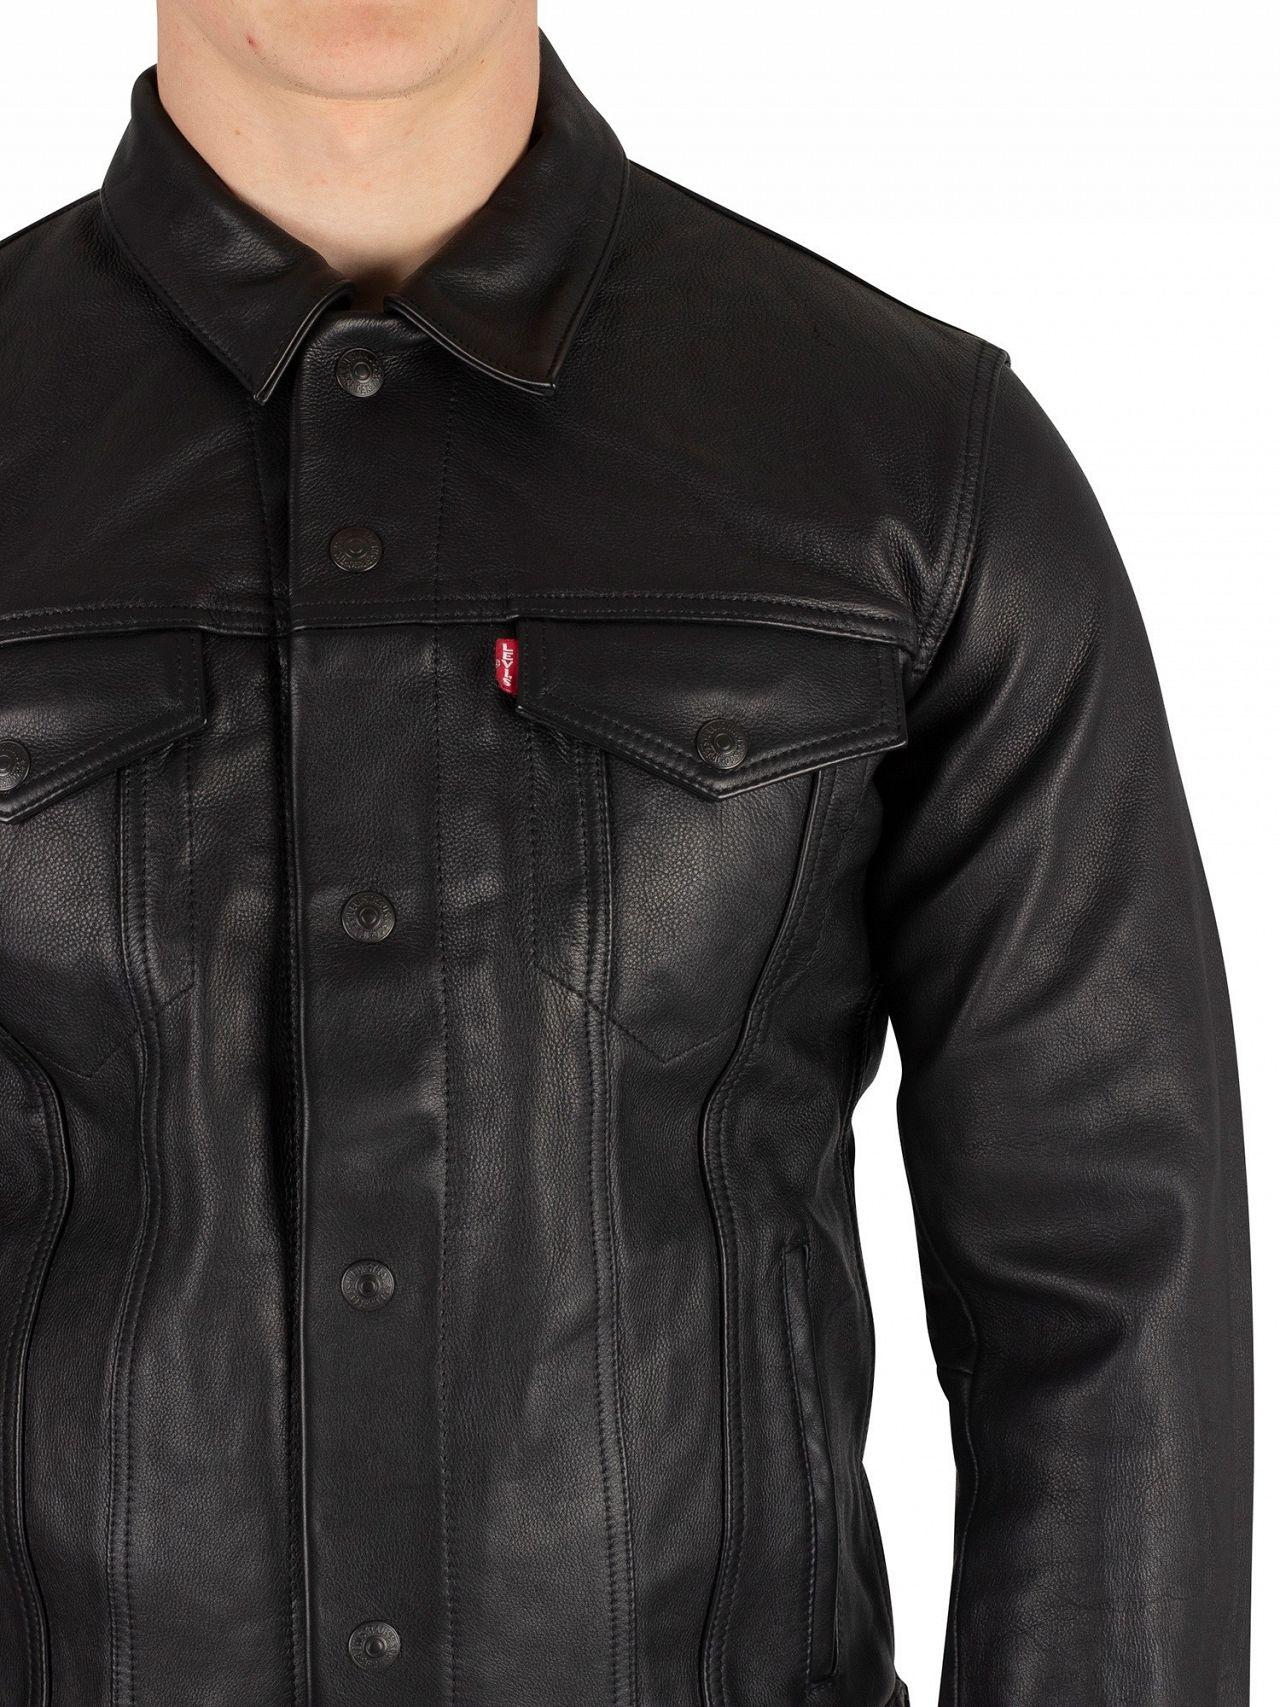 levis mens leather trucker jacket